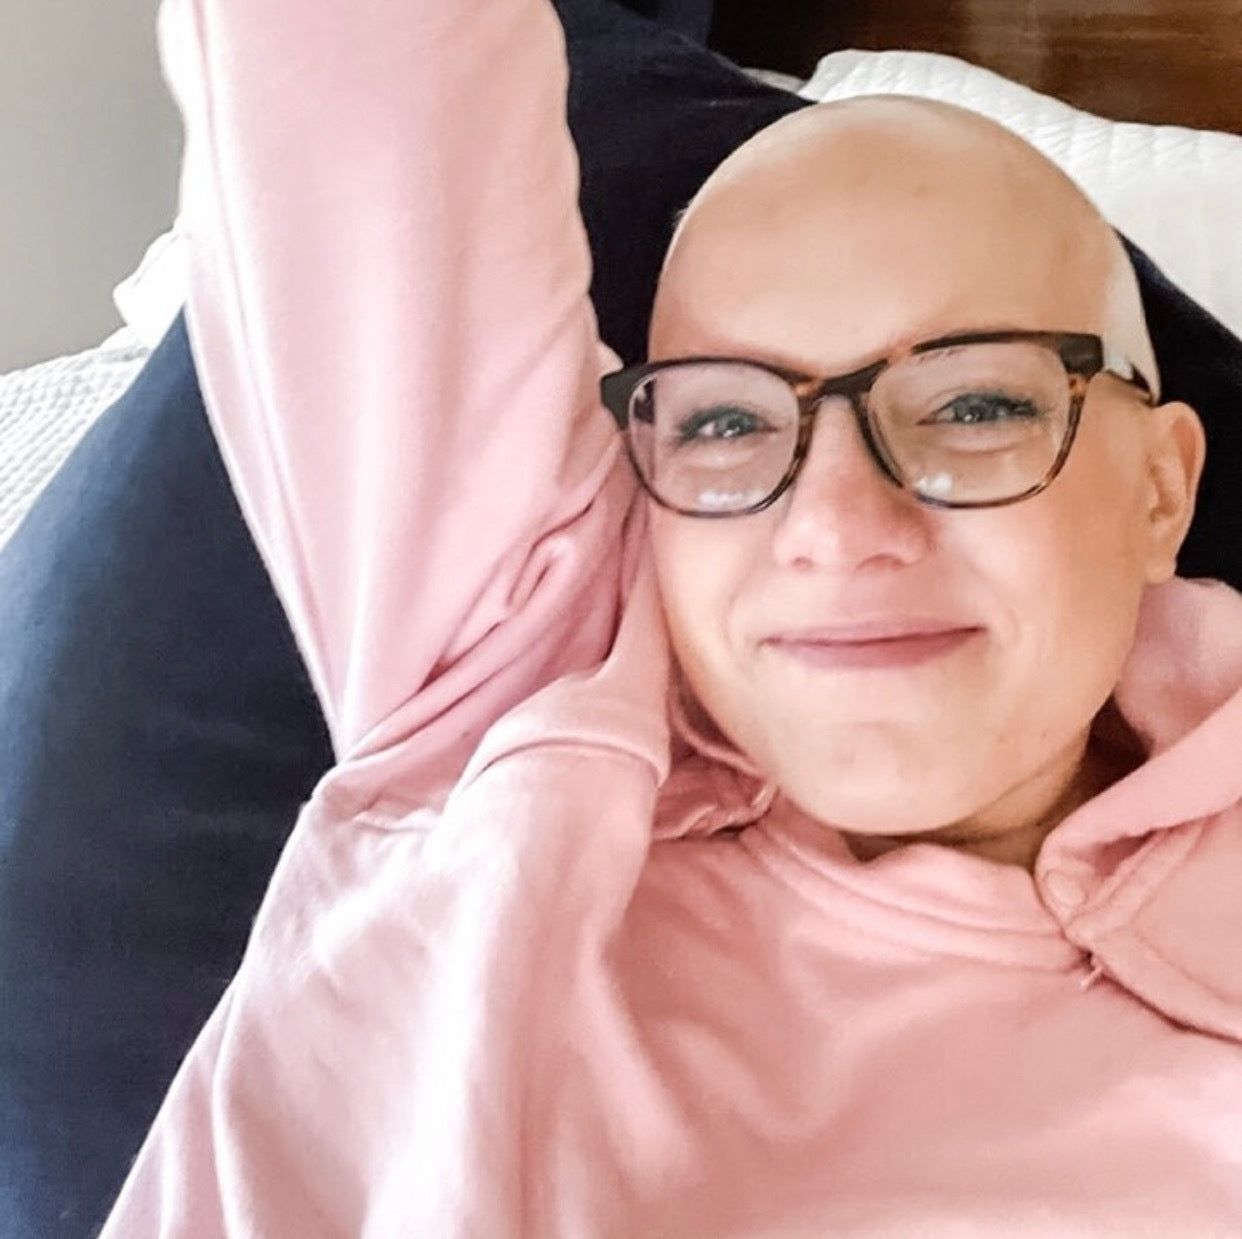 breast cancer survivor